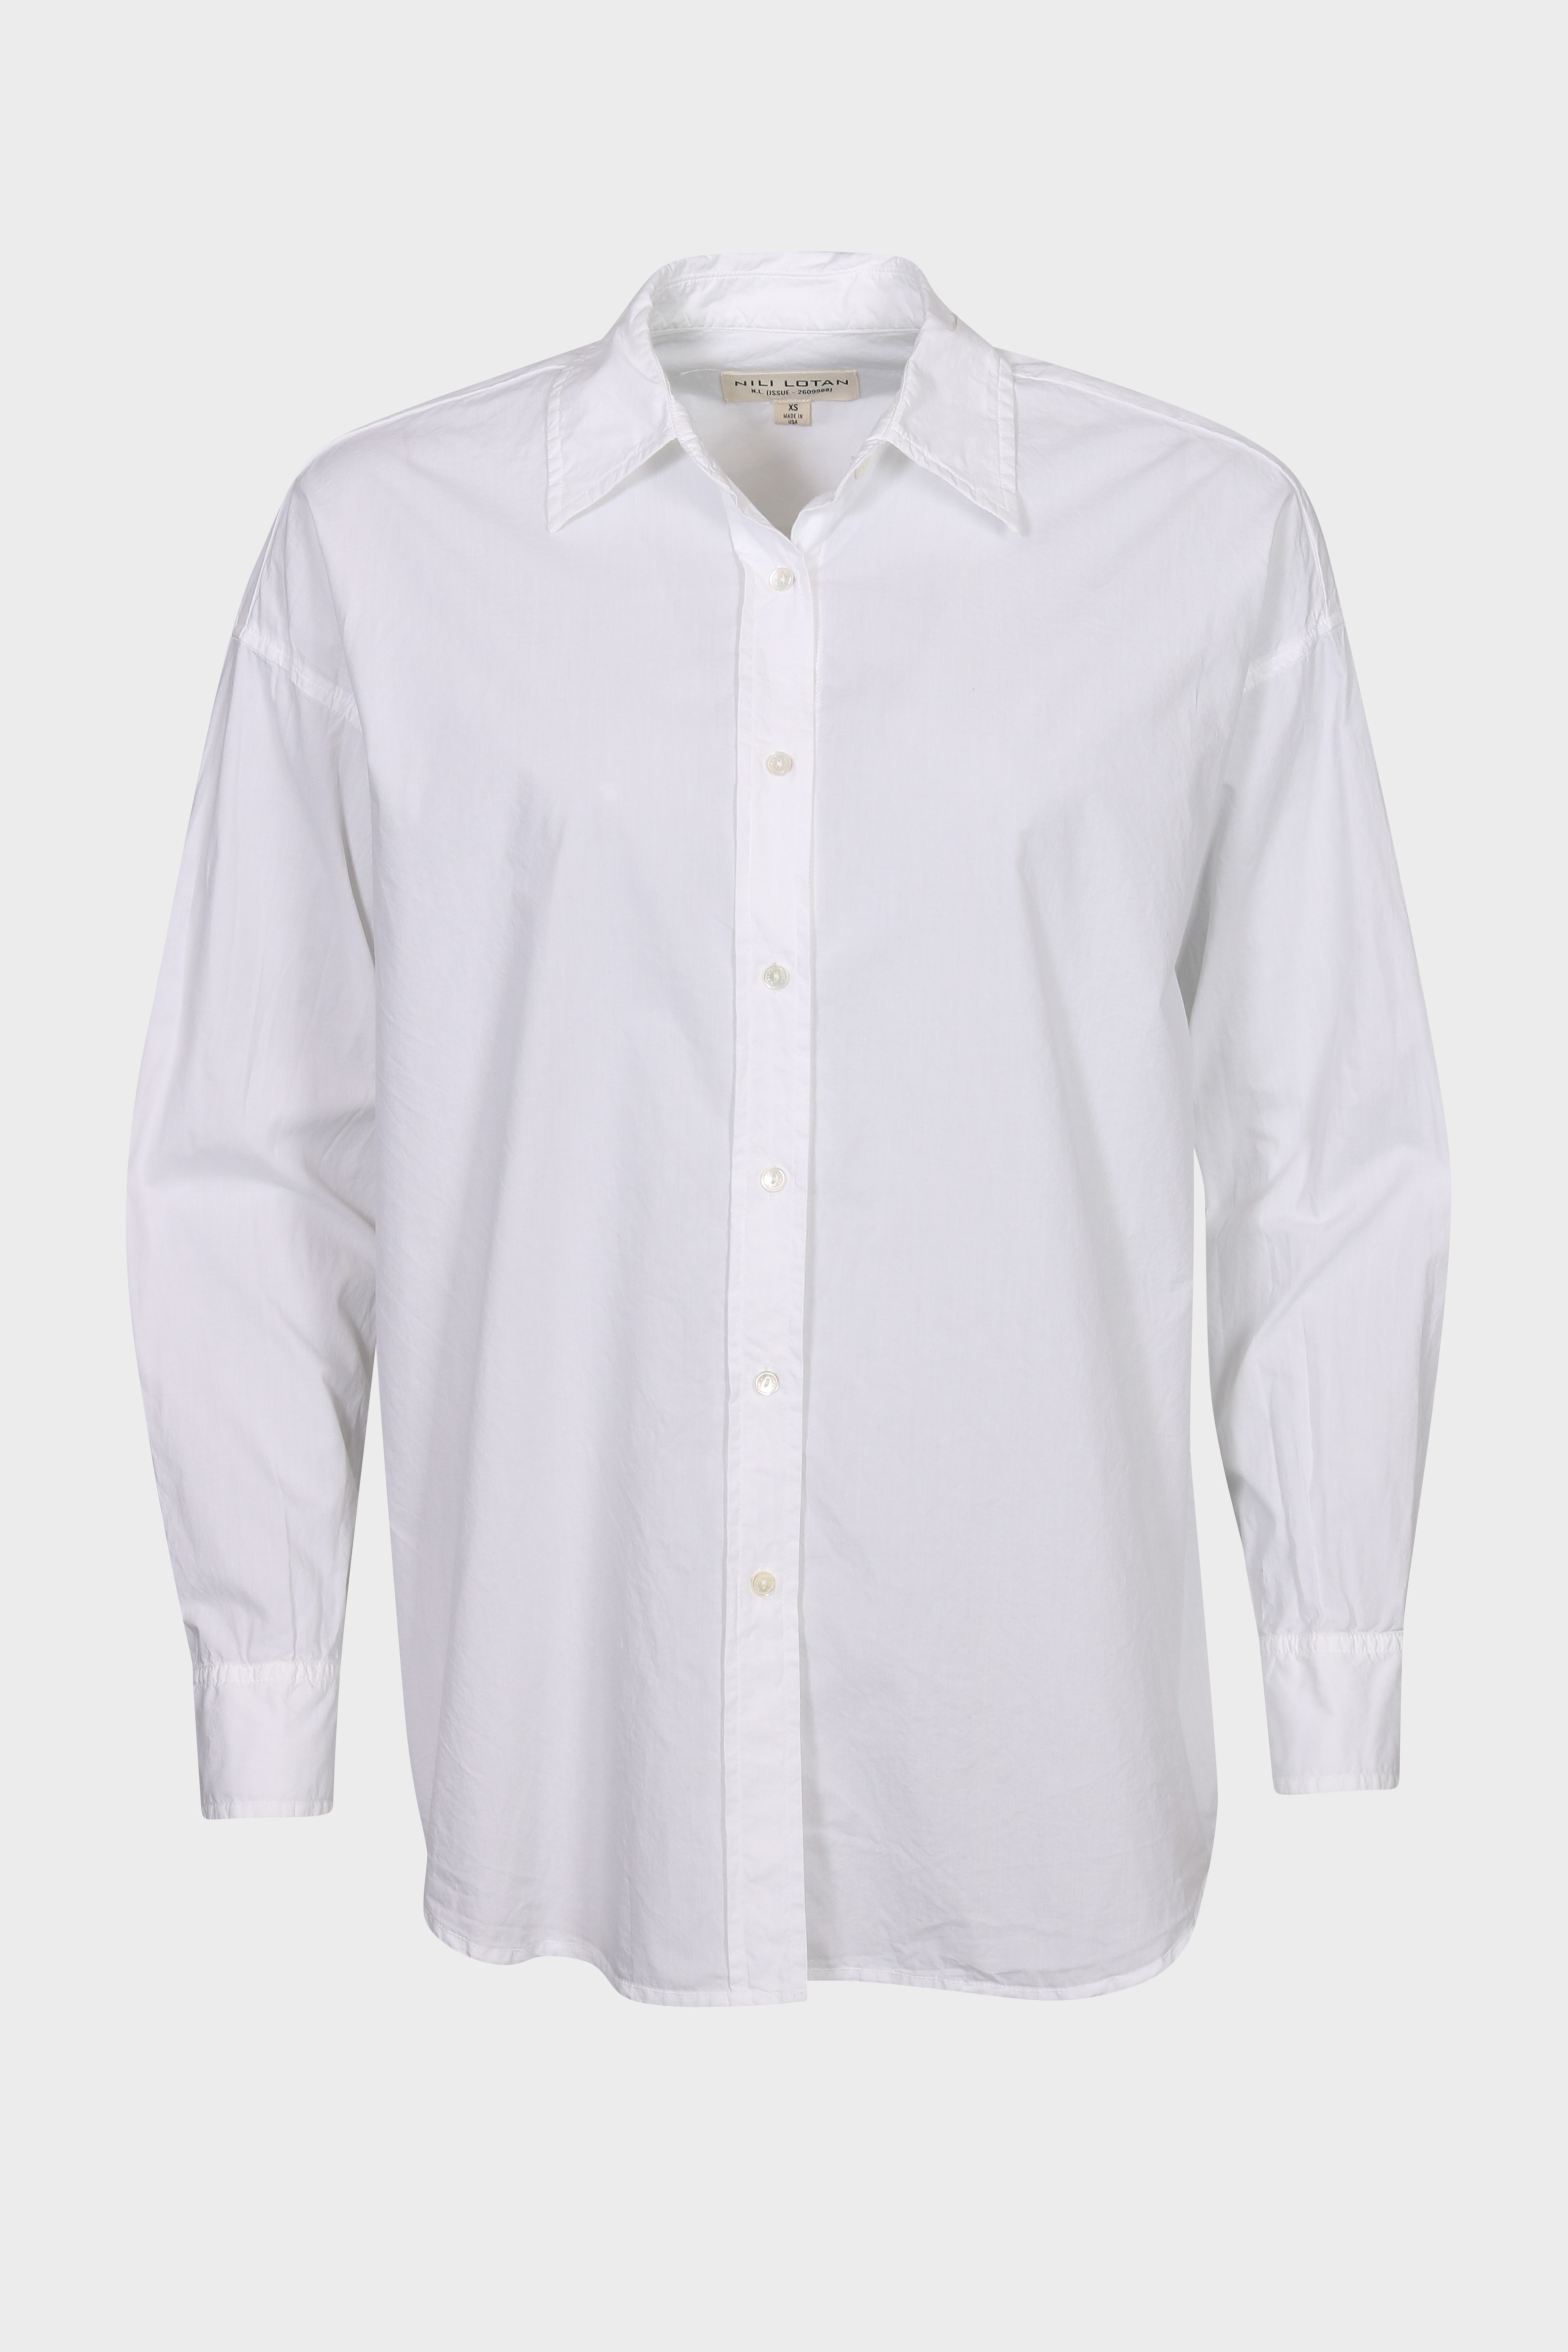 NILI LOTAN Mael Oversized Shirt in White